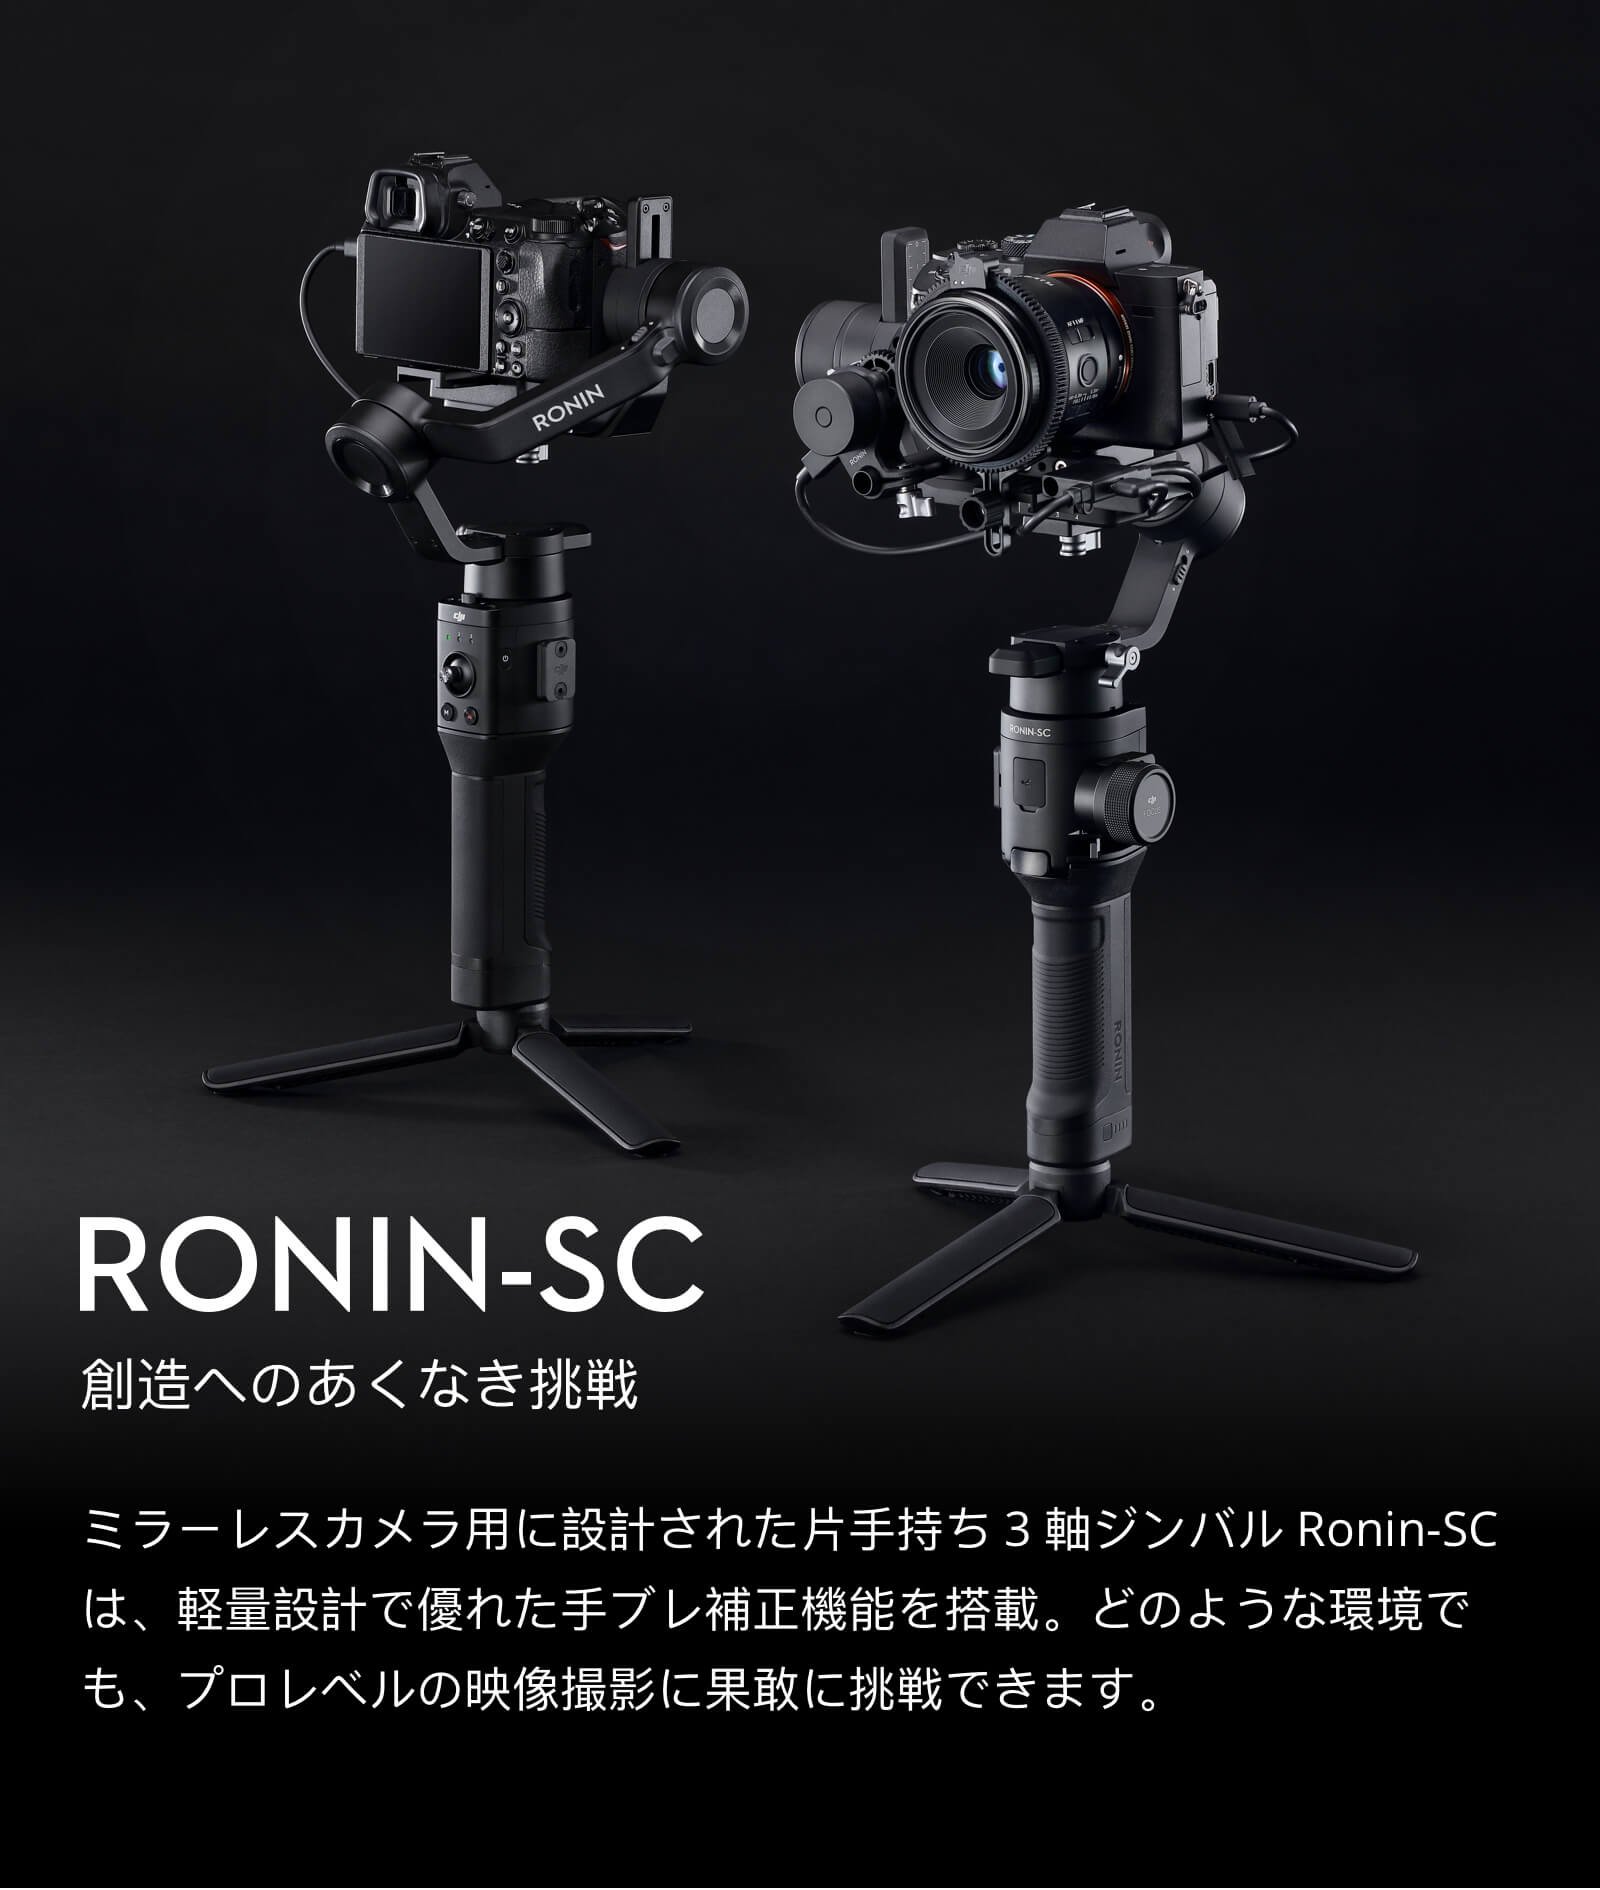 Ronin-SC